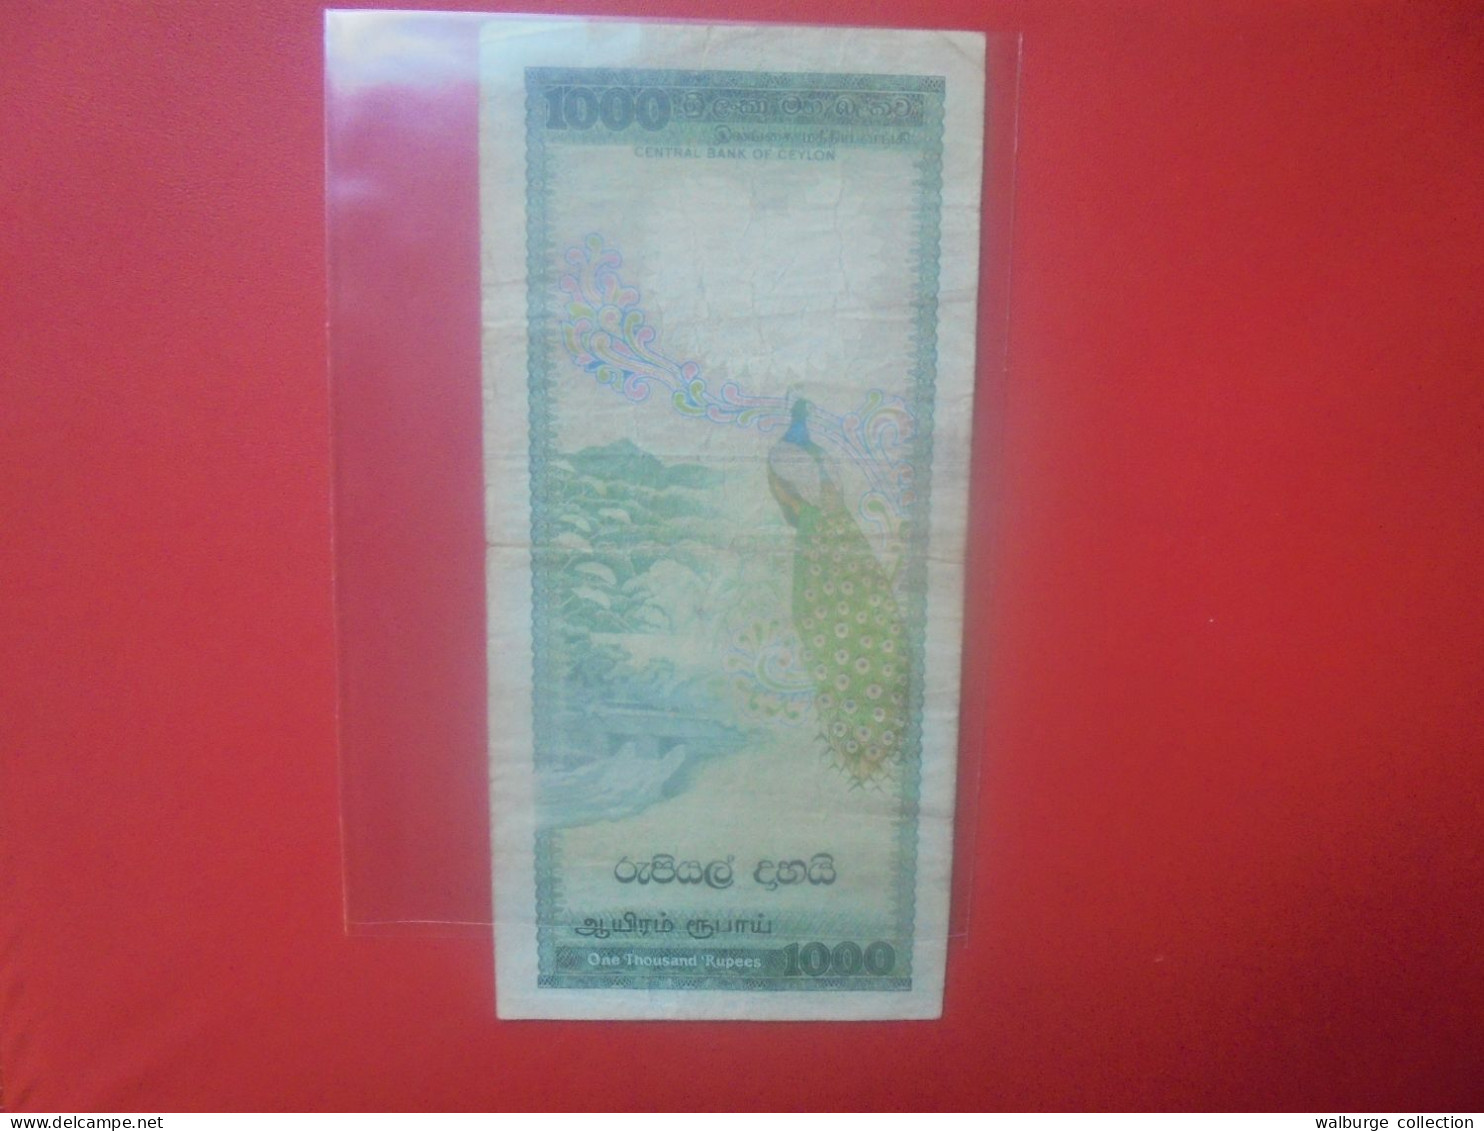 CEYLON (Sri Lanka) 1000 RUPEES 1-1-1981 Circuler RARE ! COTES:75-250$ (B.33) - Sri Lanka